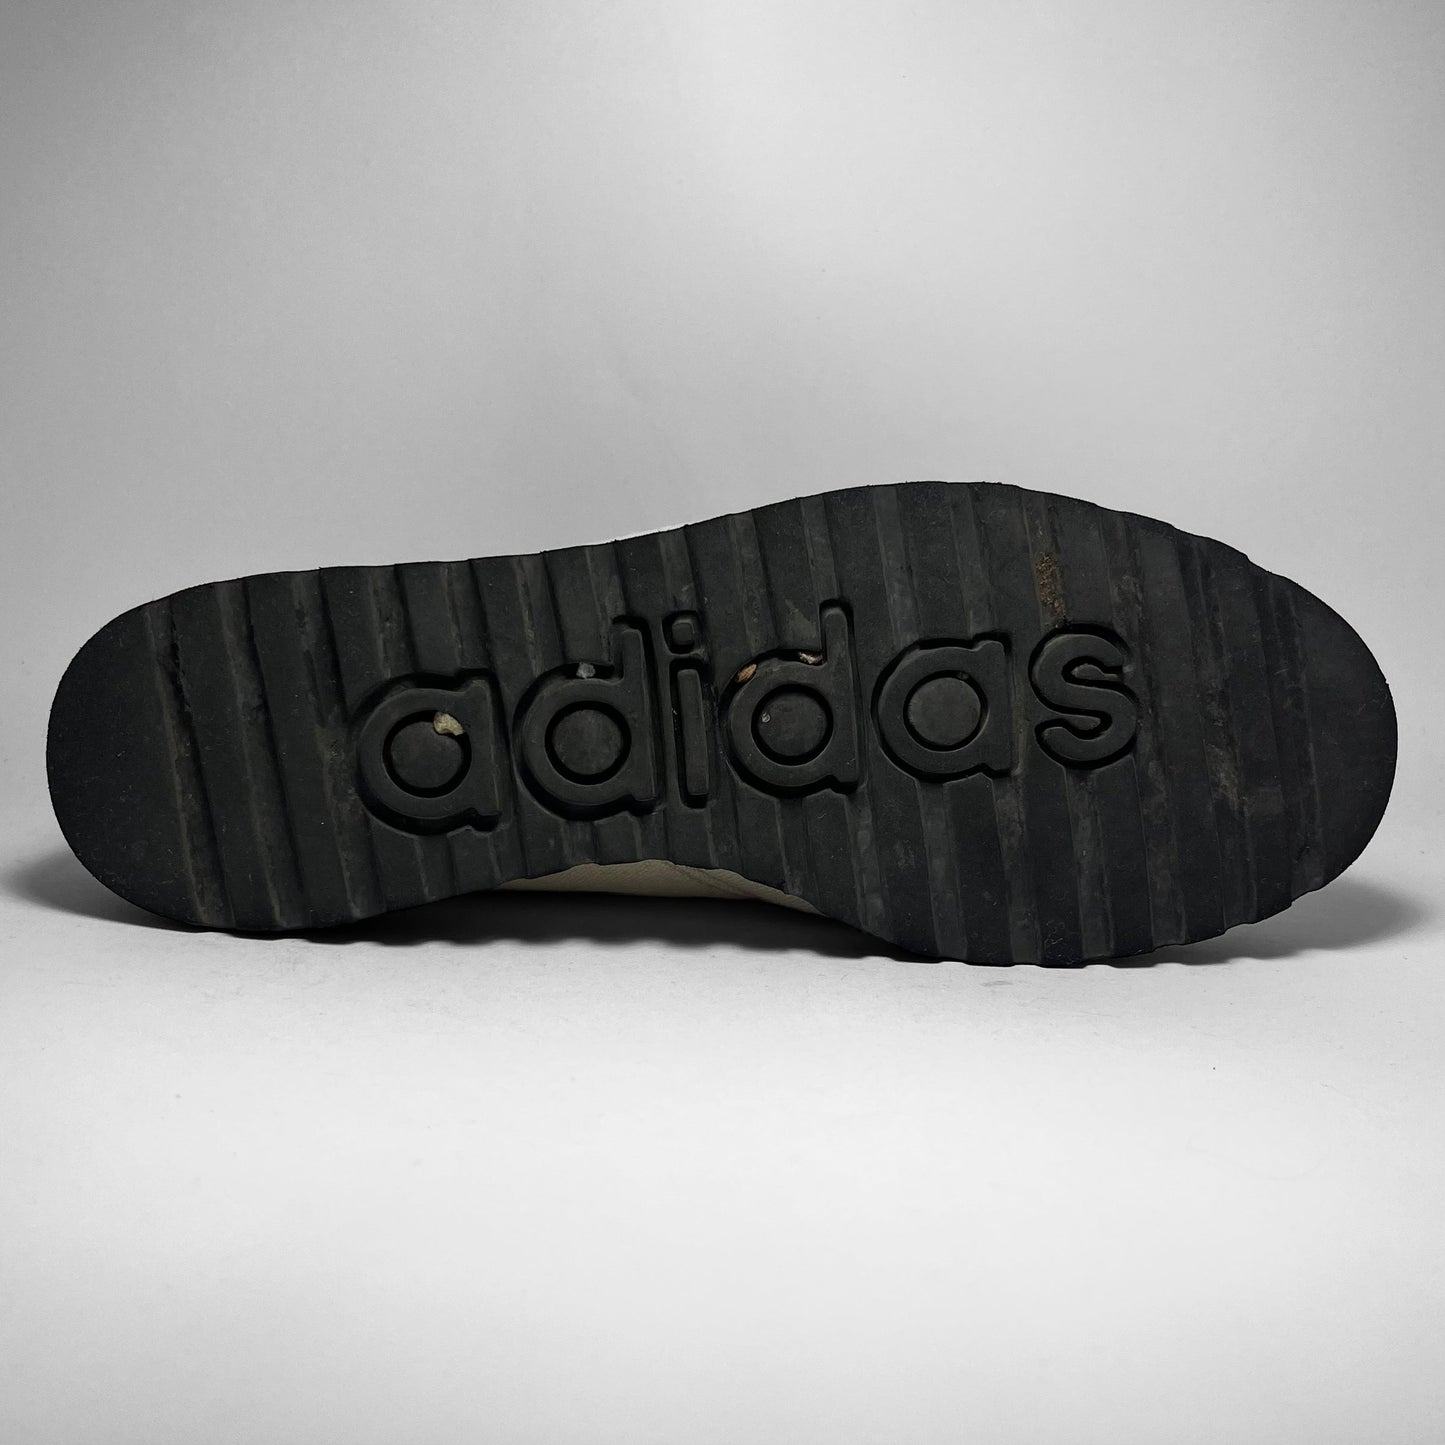 Adidas ‘X-Large Tribe’ (1993)